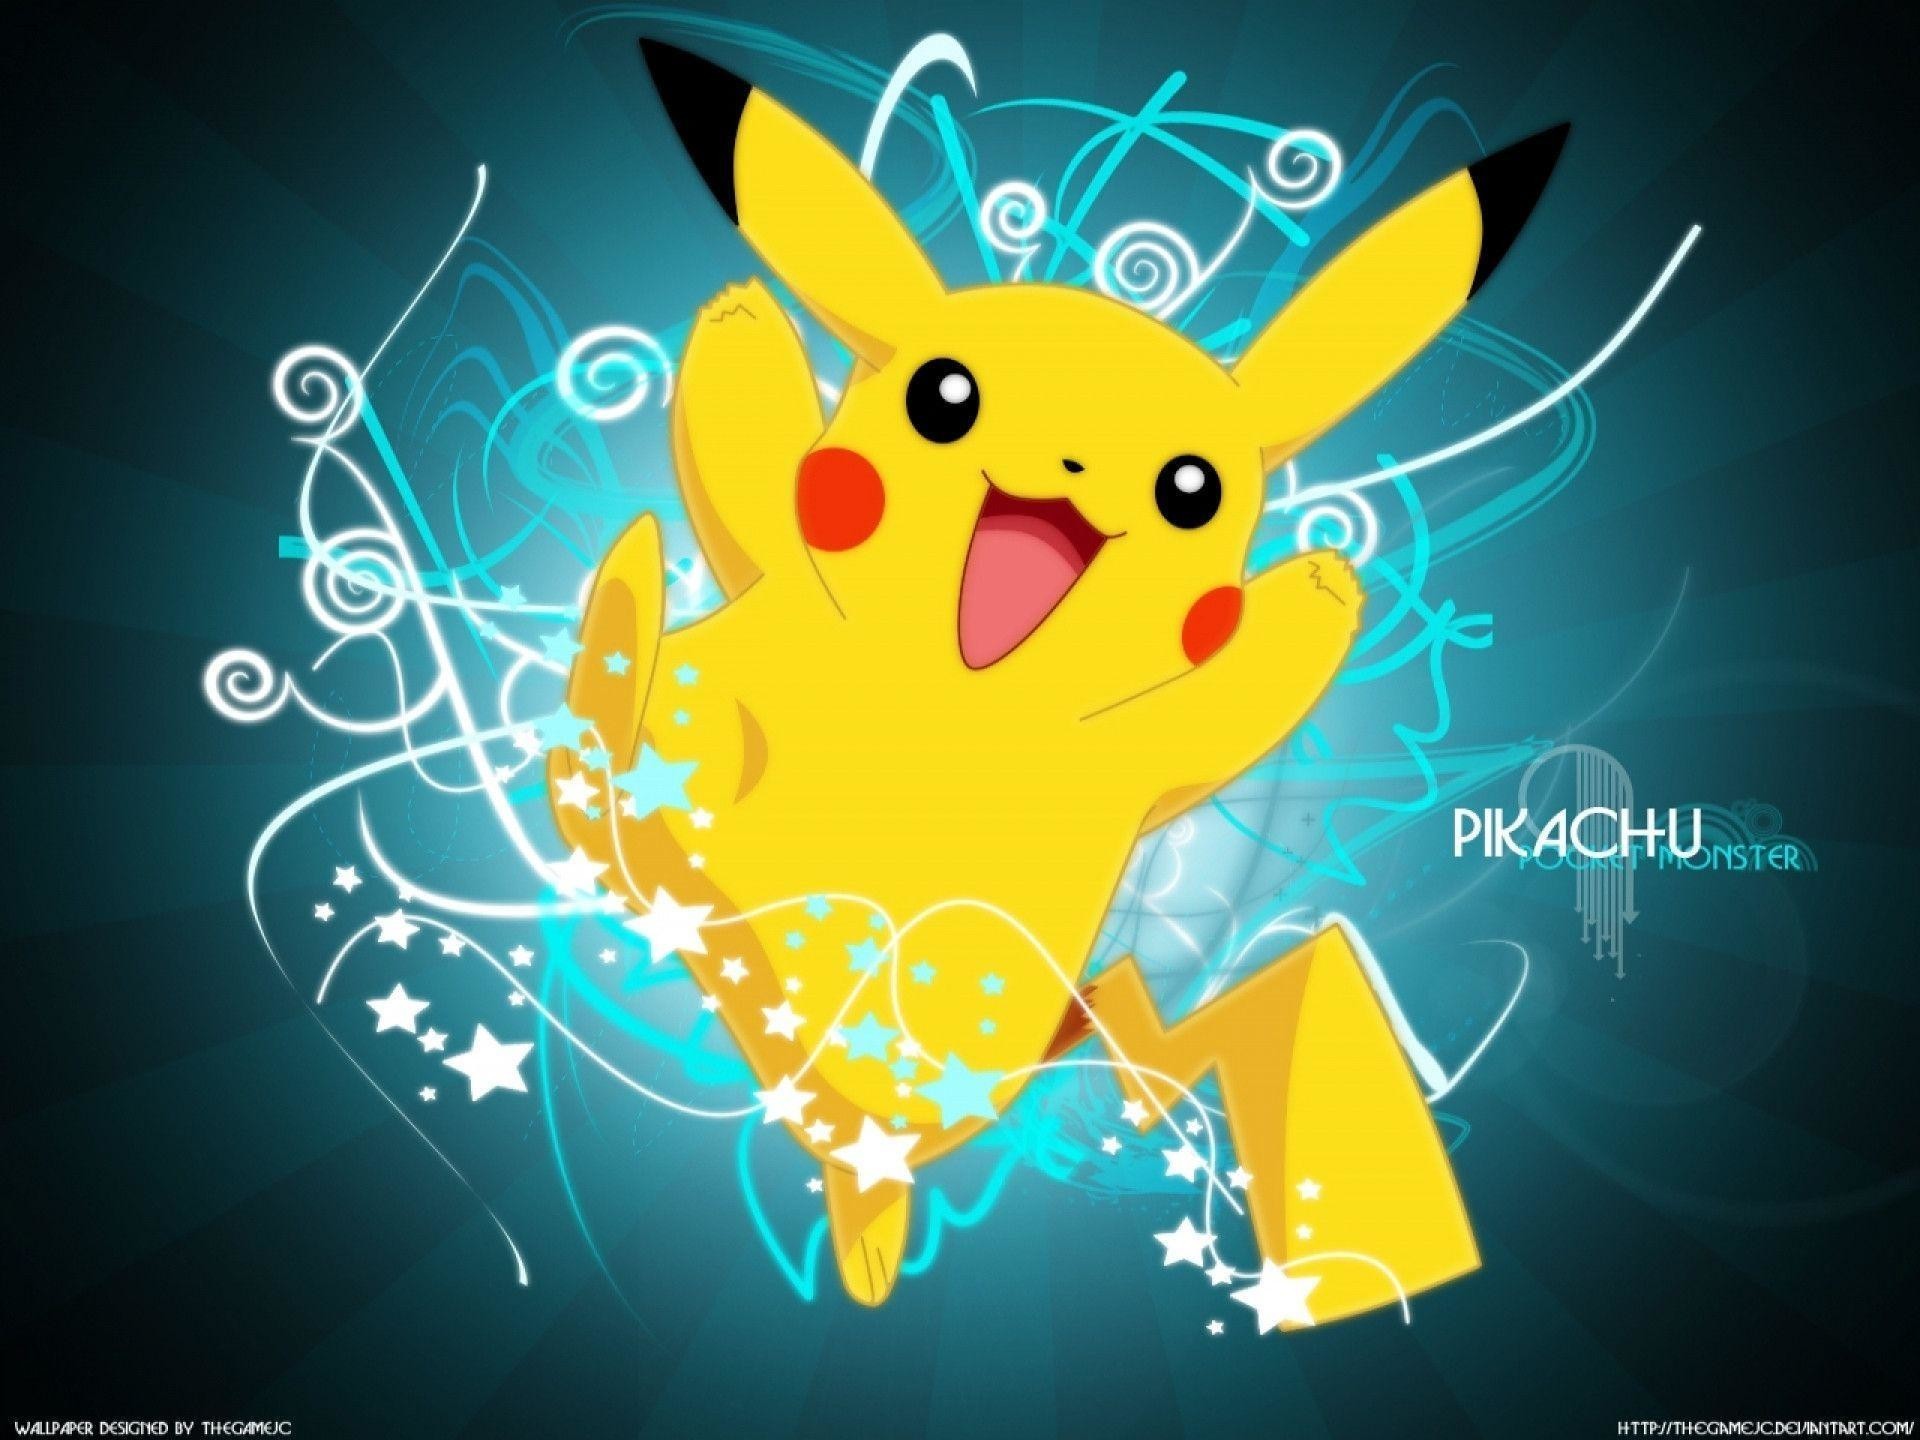 Anime Pikachu Pokemon  Free photo on Pixabay  Pixabay